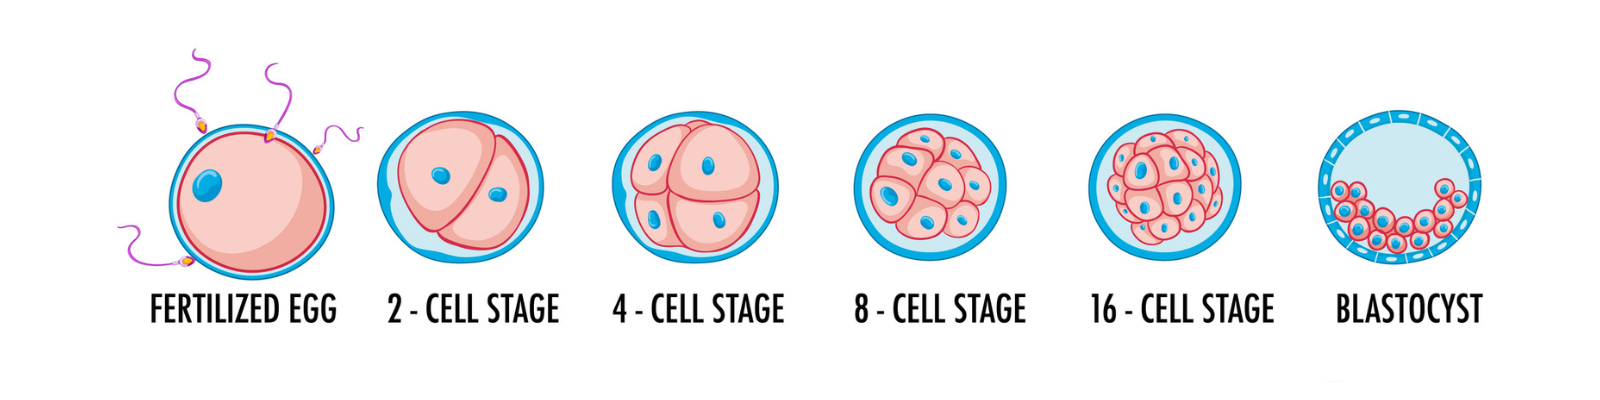 embryonic-development-graphic